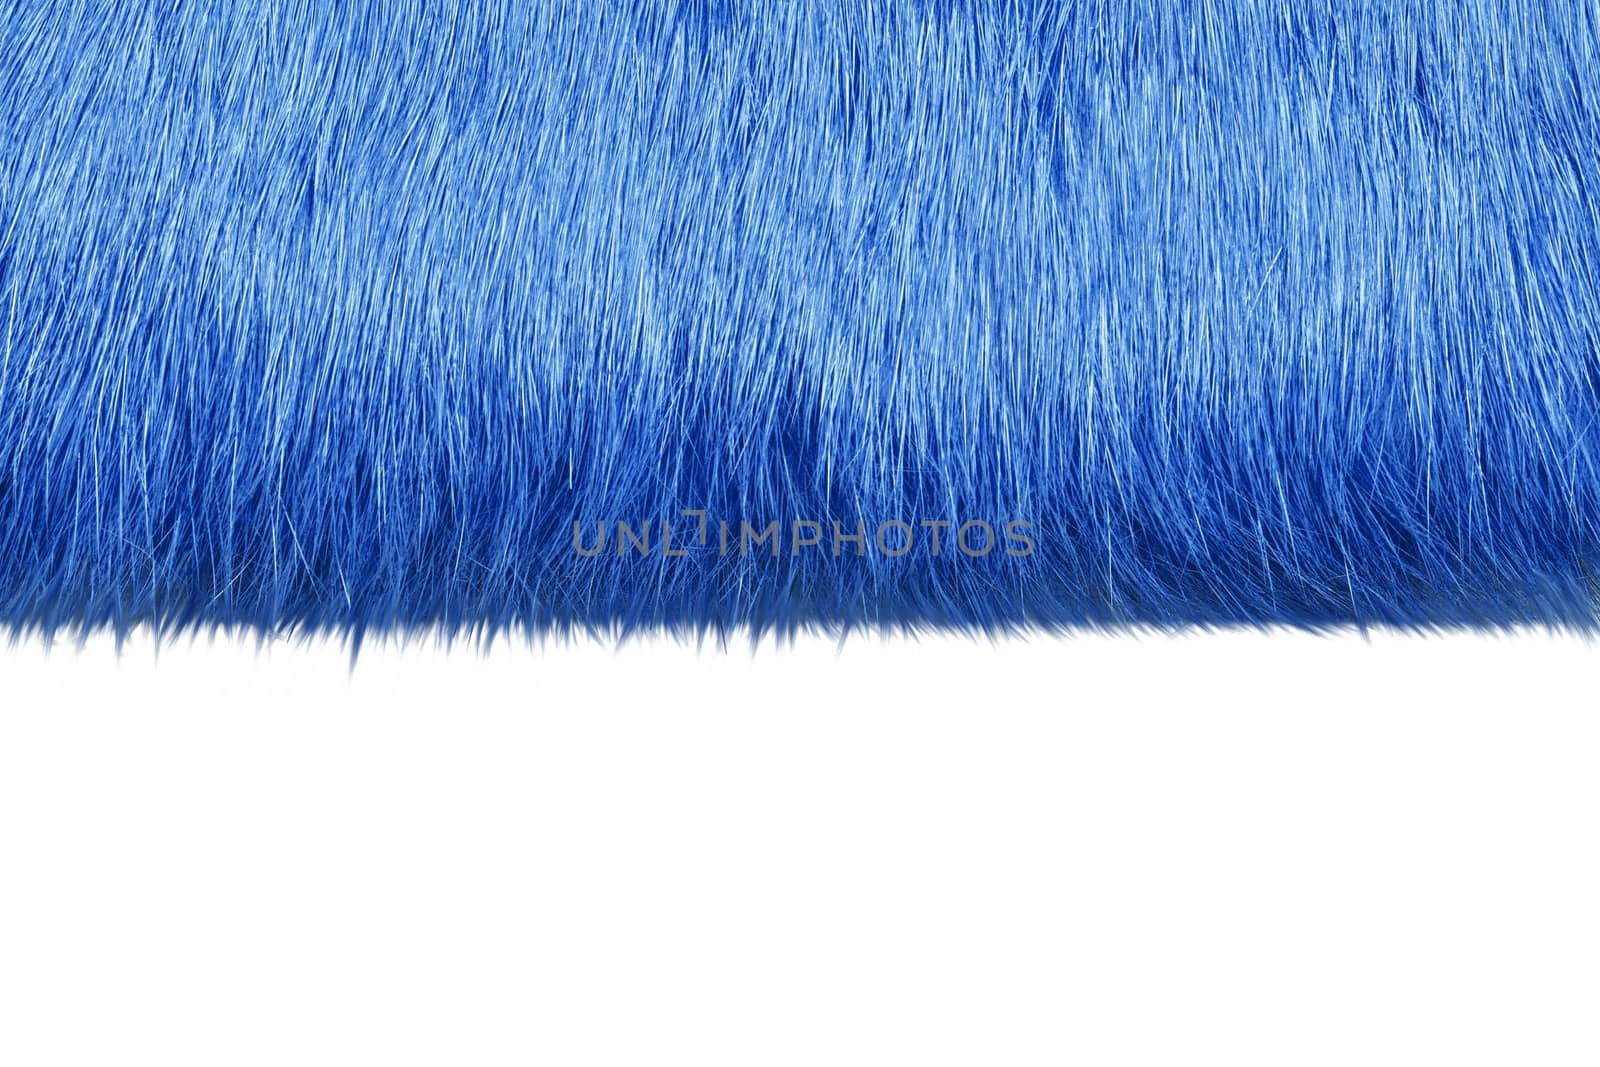 Blue fur by Onigiristudio